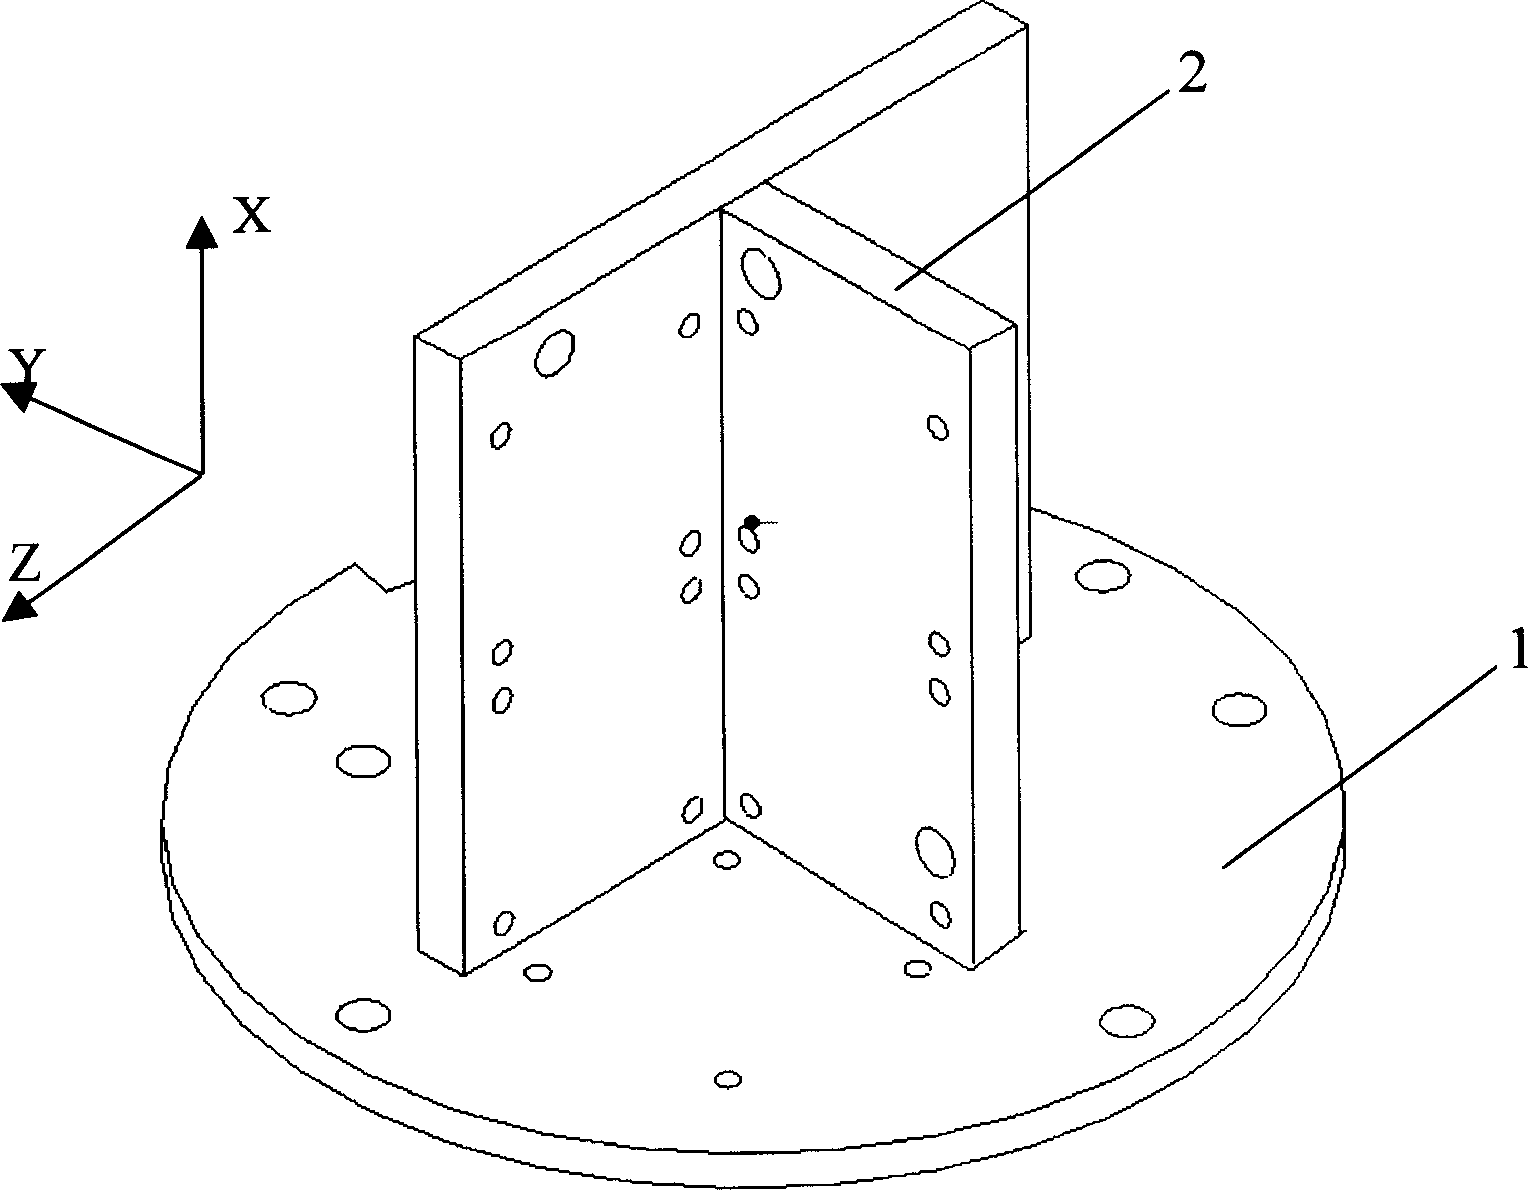 Connected inertia measuring device of open-loop fibre-optical